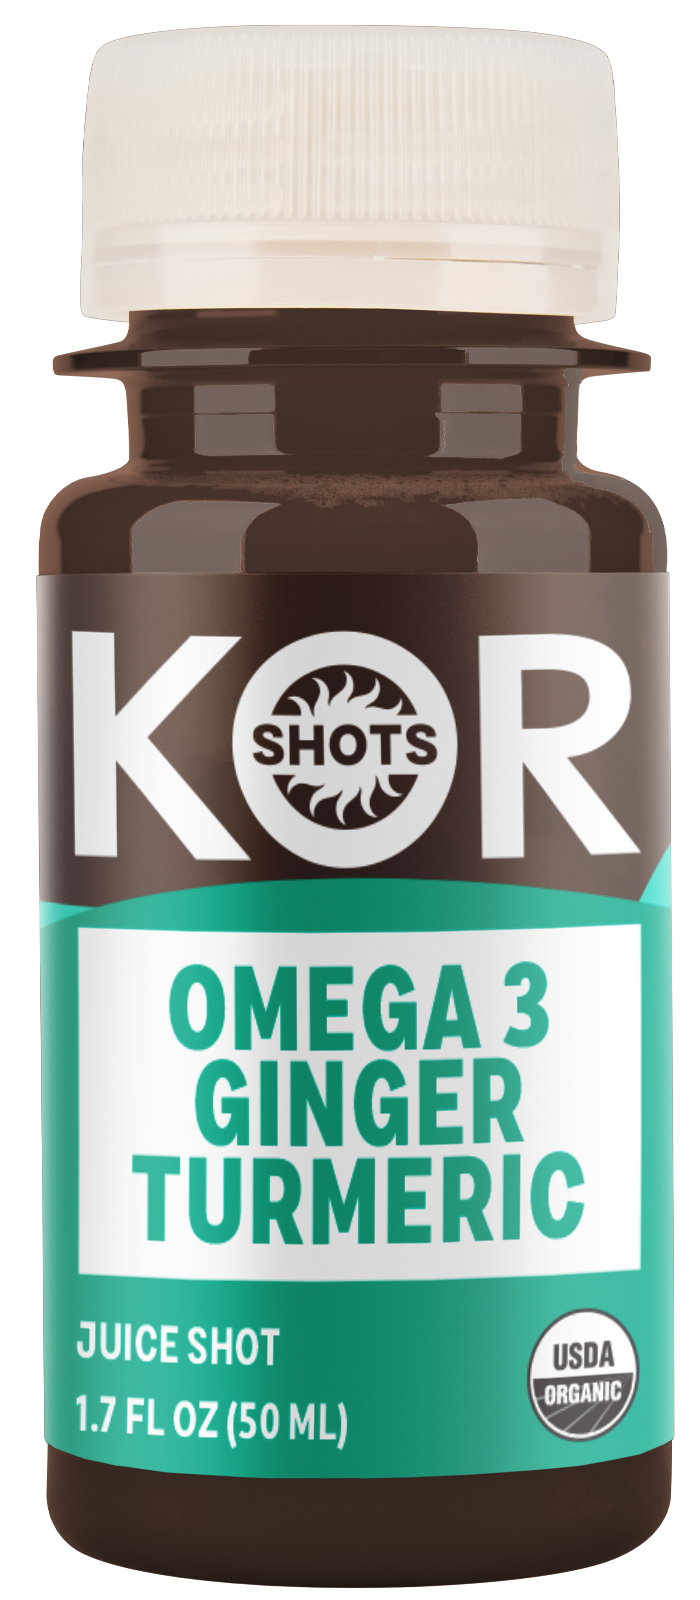 Omega 3, Ginger and Turmeric | Single